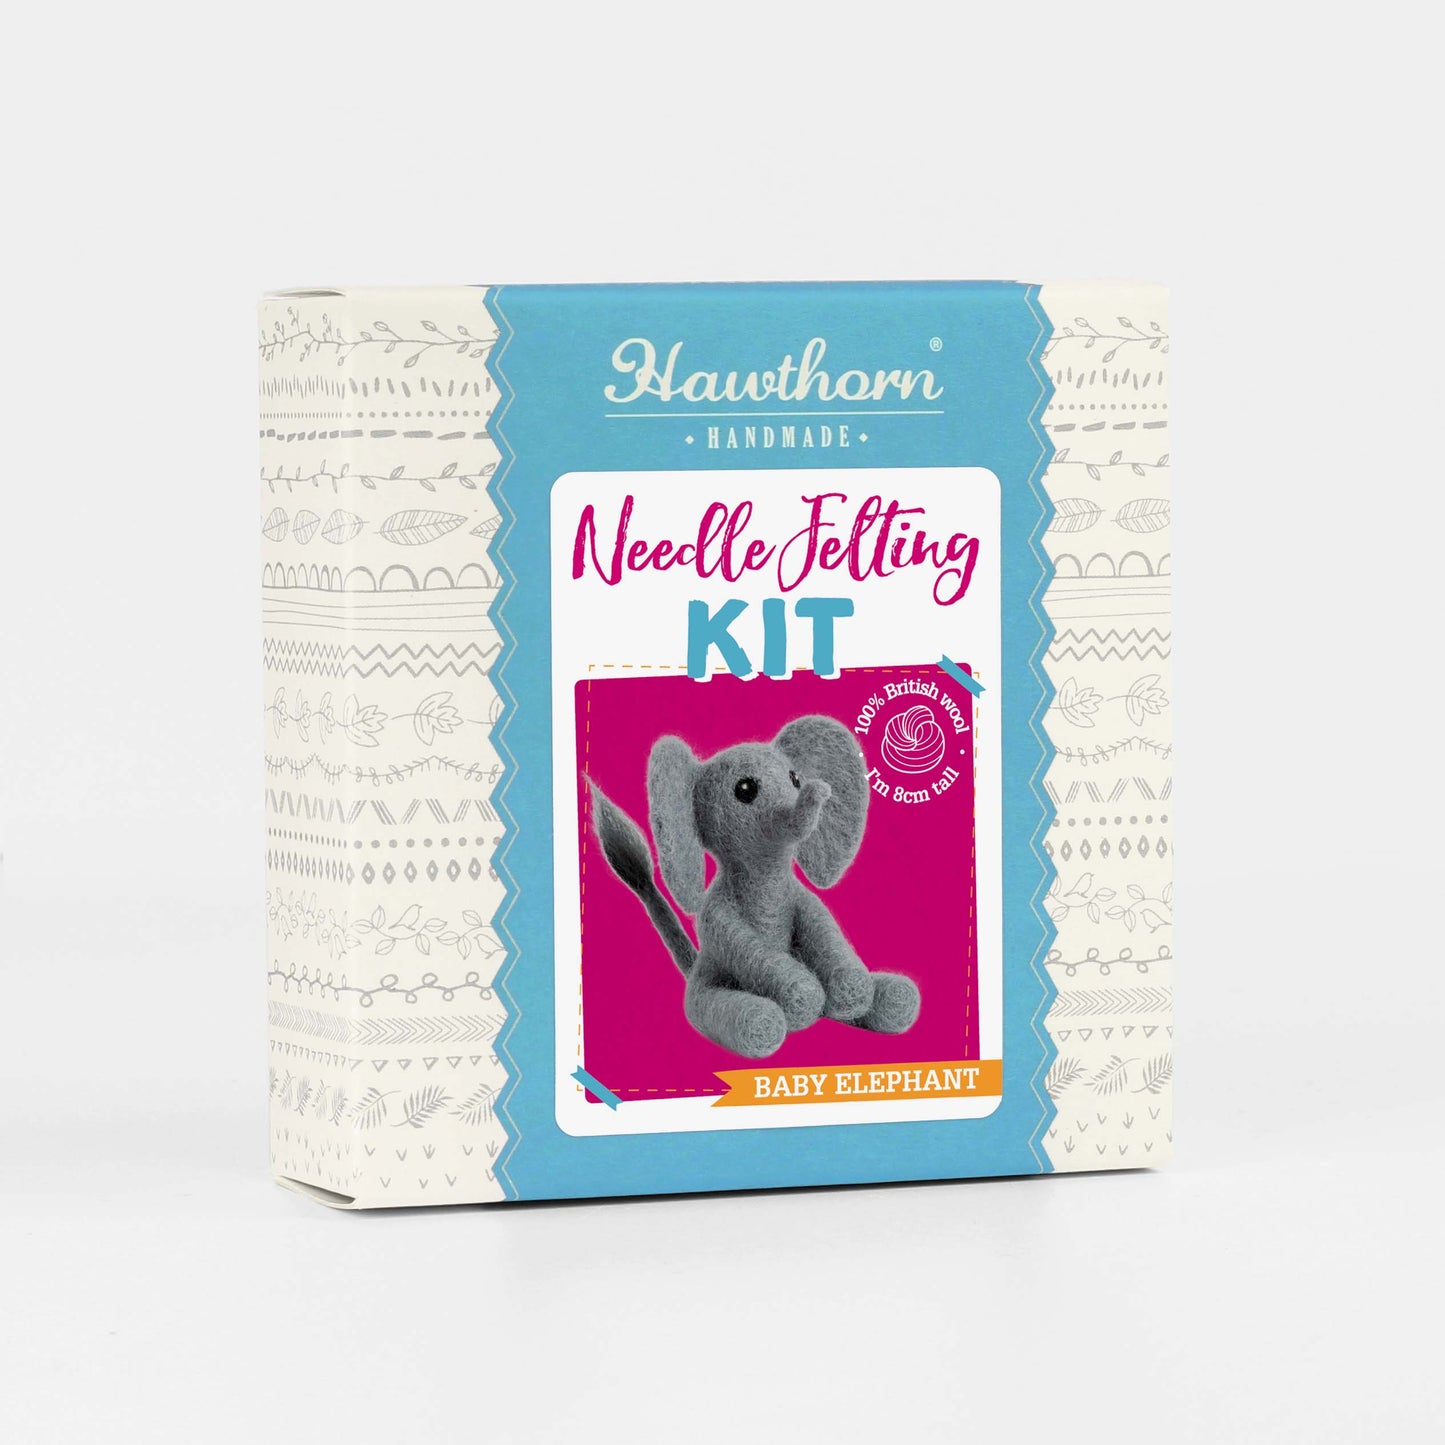 Needle Felting Kits by Hawthorn Handmade